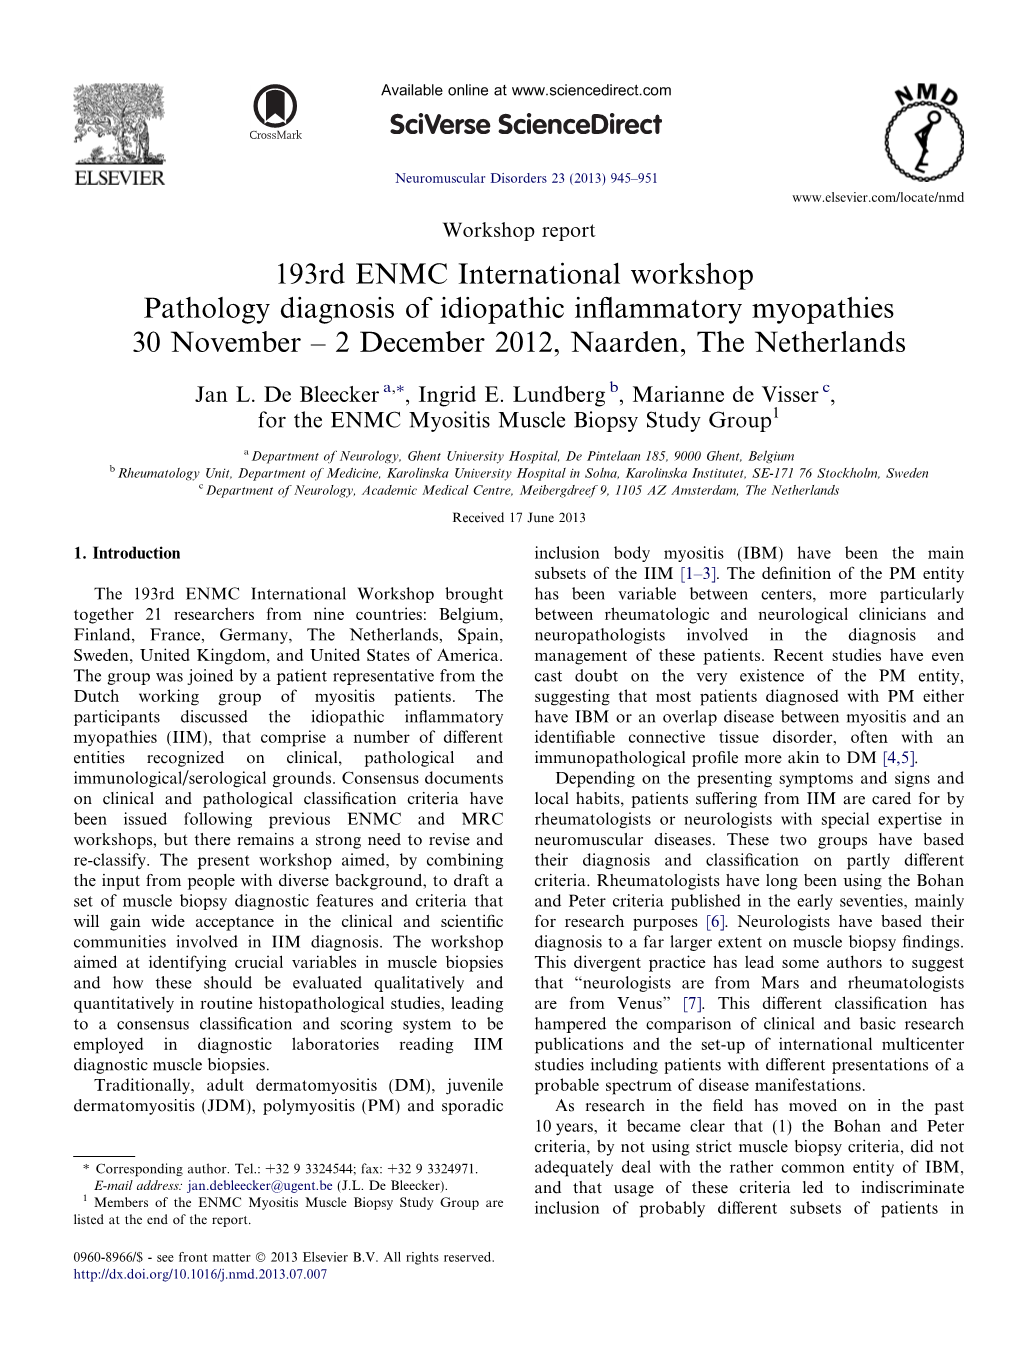 193Rd ENMC International Workshop Pathology Diagnosis of Idiopathic Inﬂammatory Myopathies 30 November – 2 December 2012, Naarden, the Netherlands